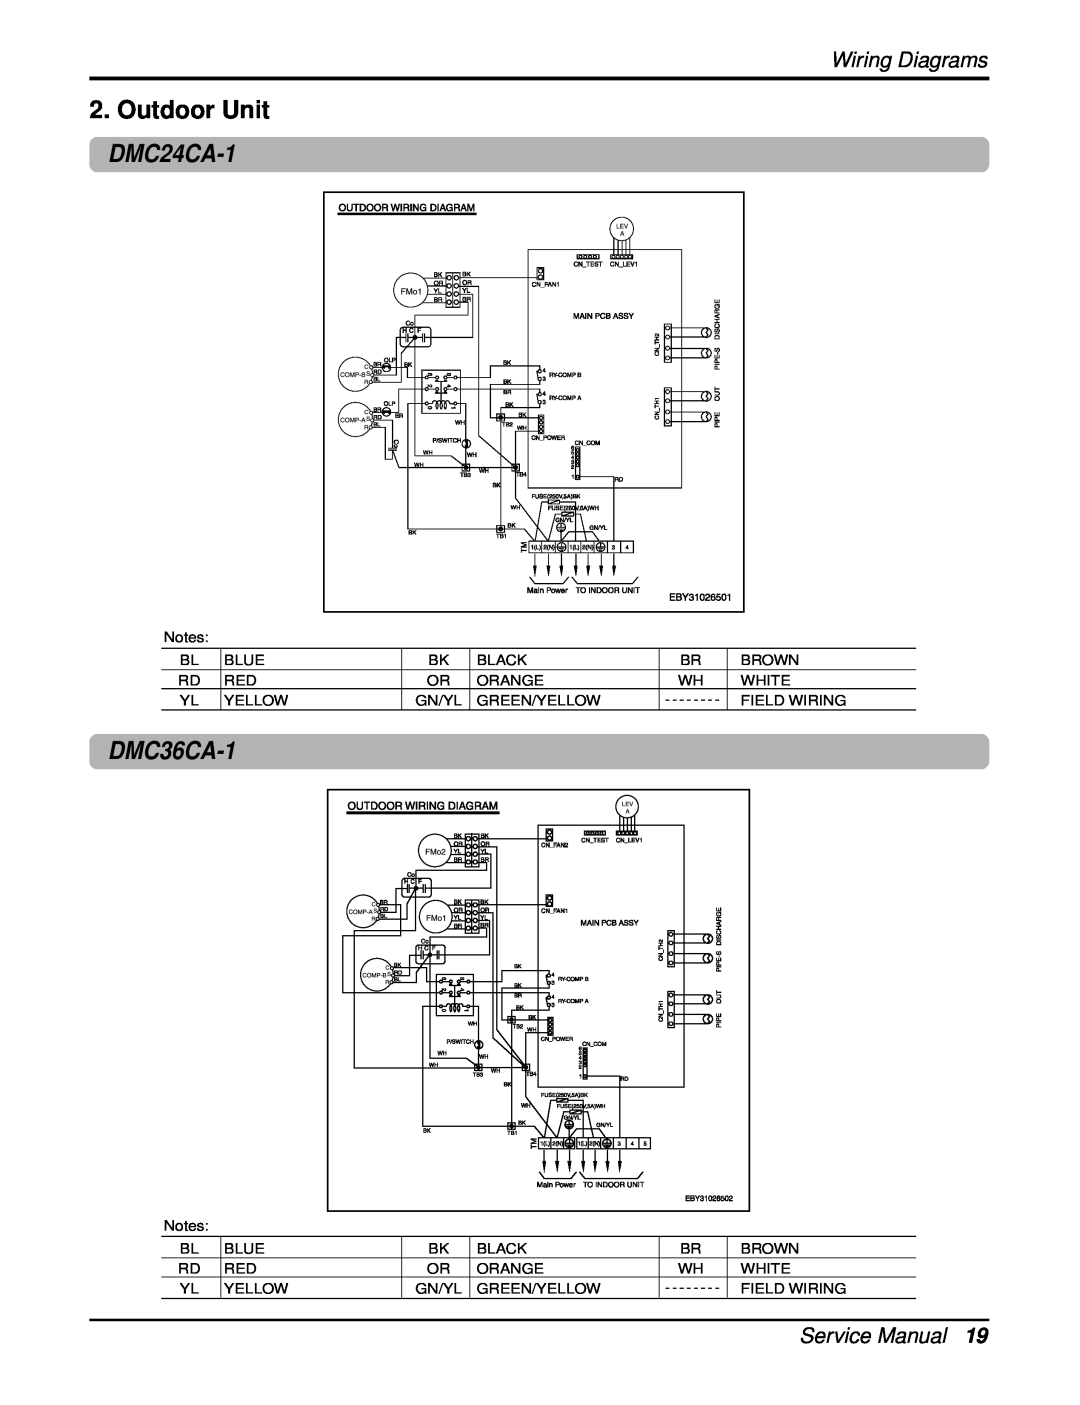 Heat Controller DMC36CA-1 manual Outdoor Unit, DMC24CA-1, Wiring Diagrams 